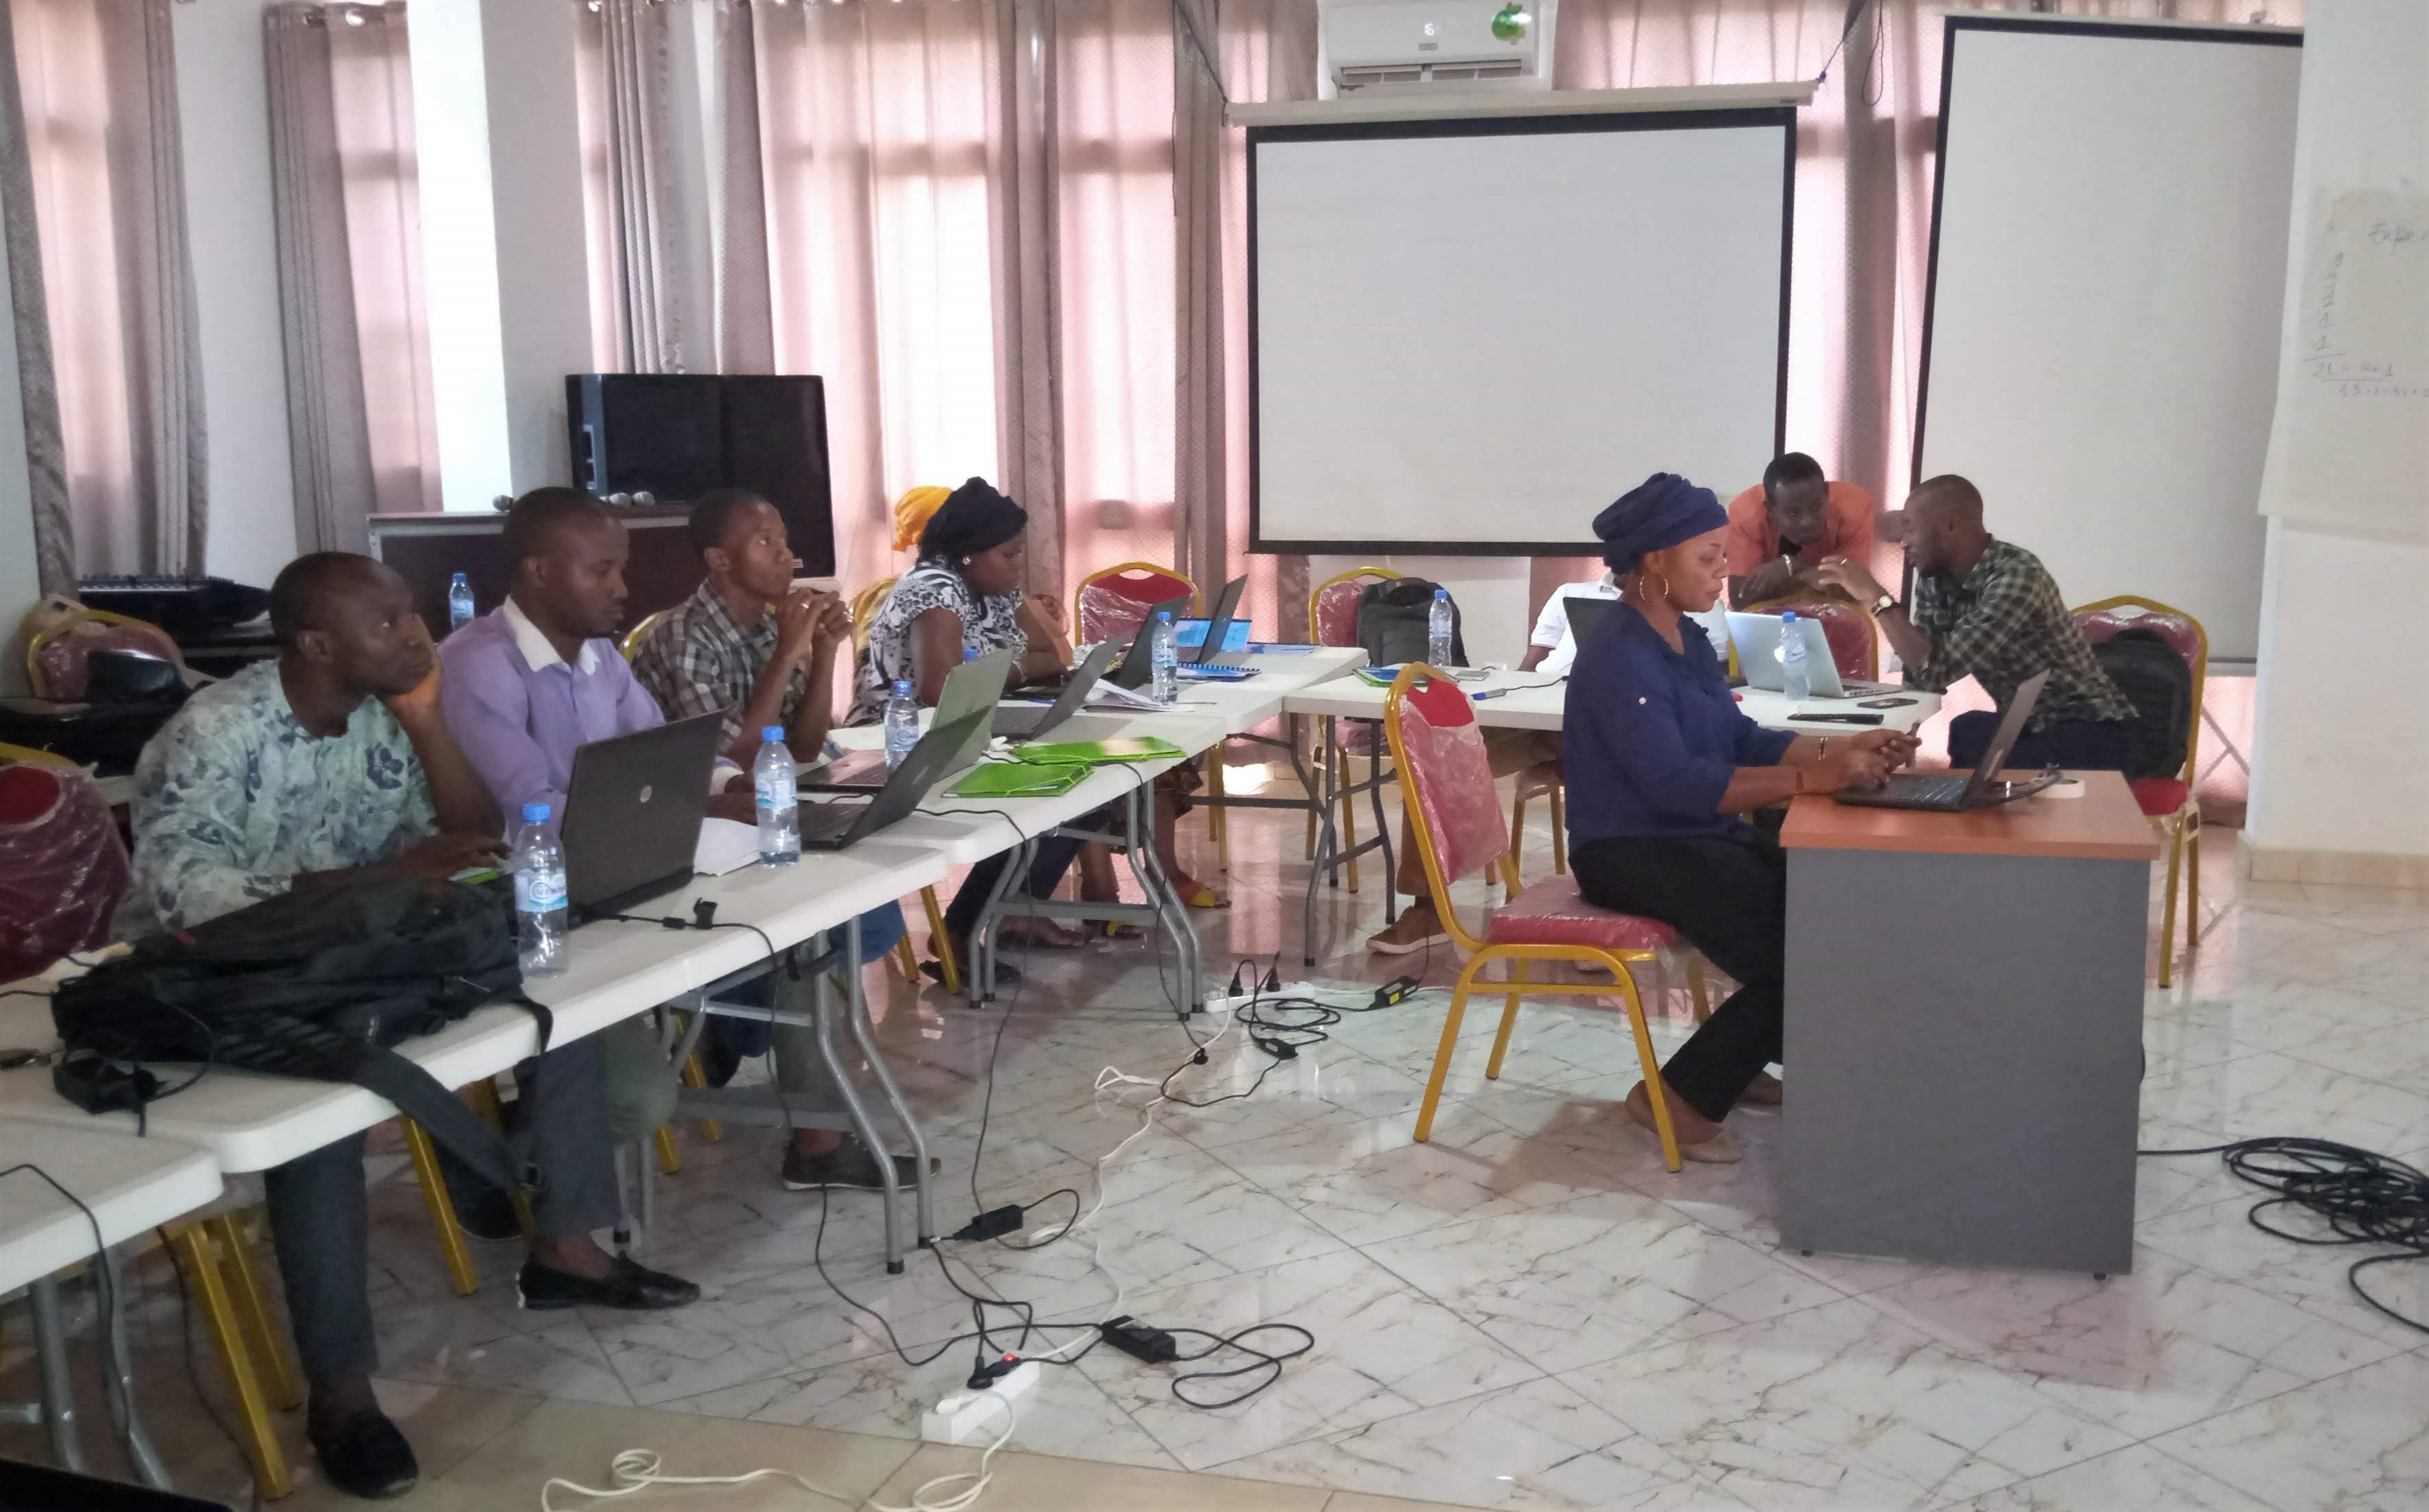 Guinea Malaria Data Availability Workshop. Photo credit: Abu Quisia, GHSC-PSM.